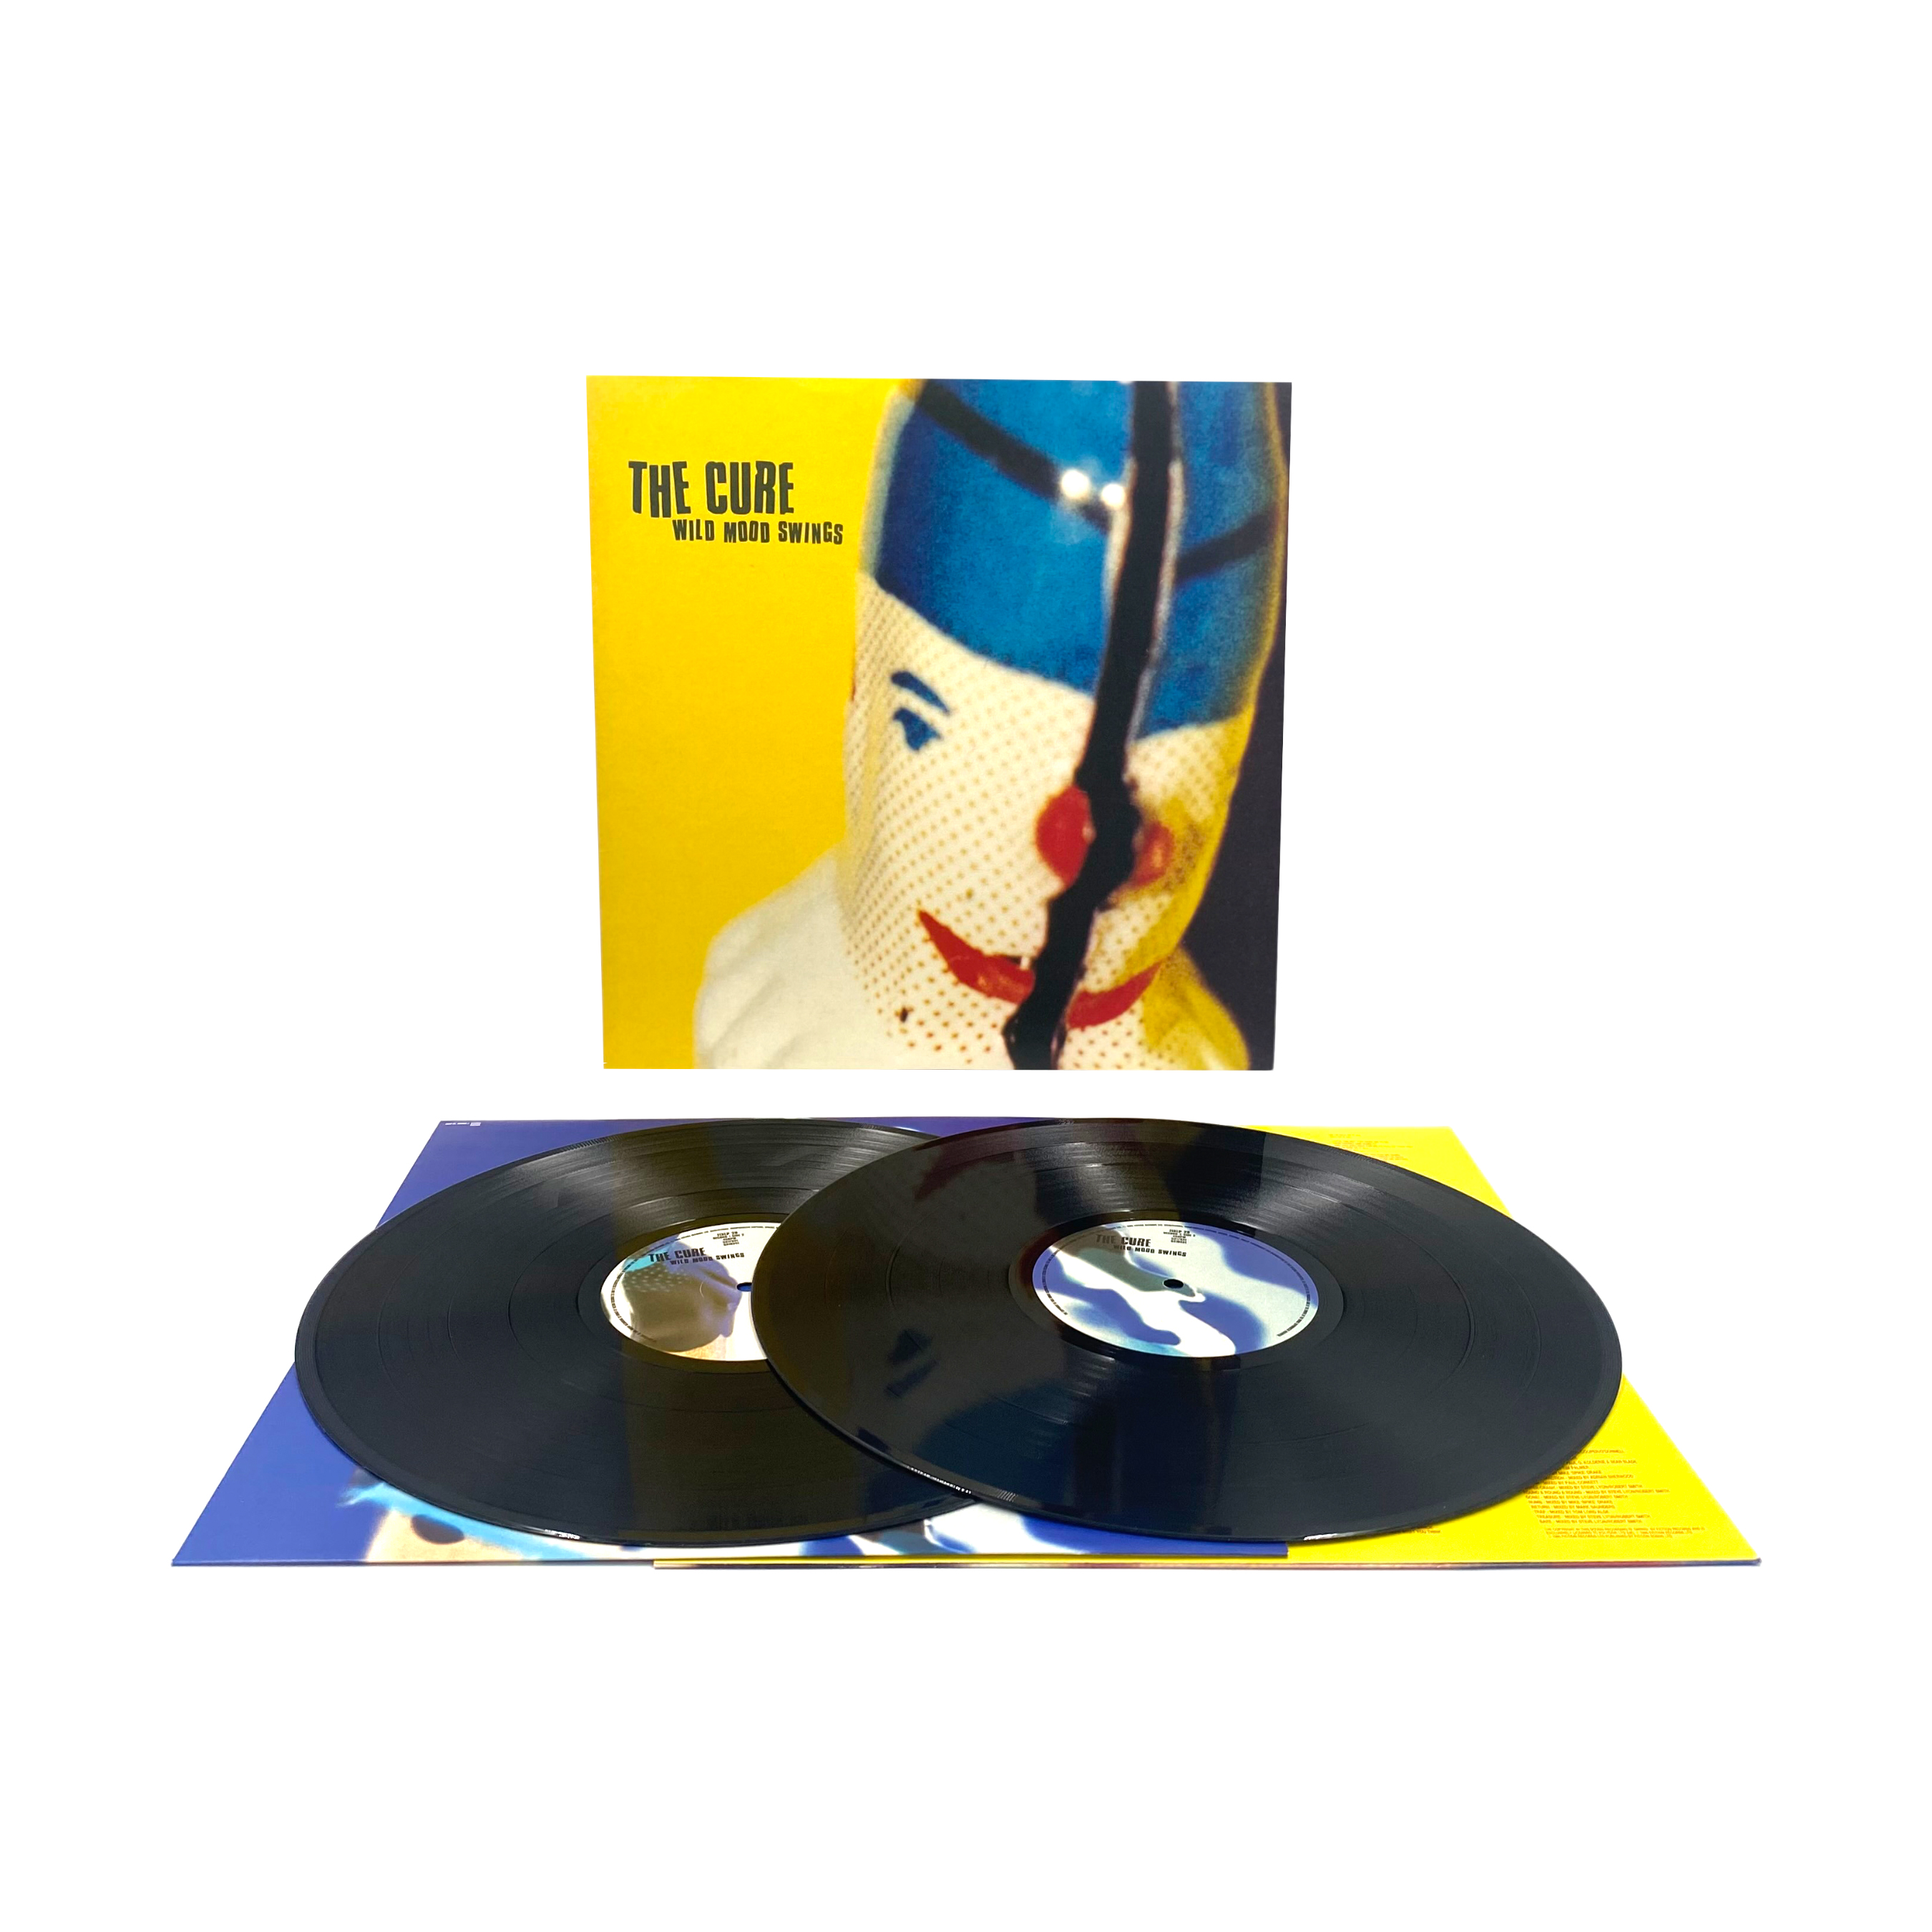 https://quals.ua/image/catalog/Covers/the-cure-wild-mood-swings-uk-original-vinyl-2lp.jpg